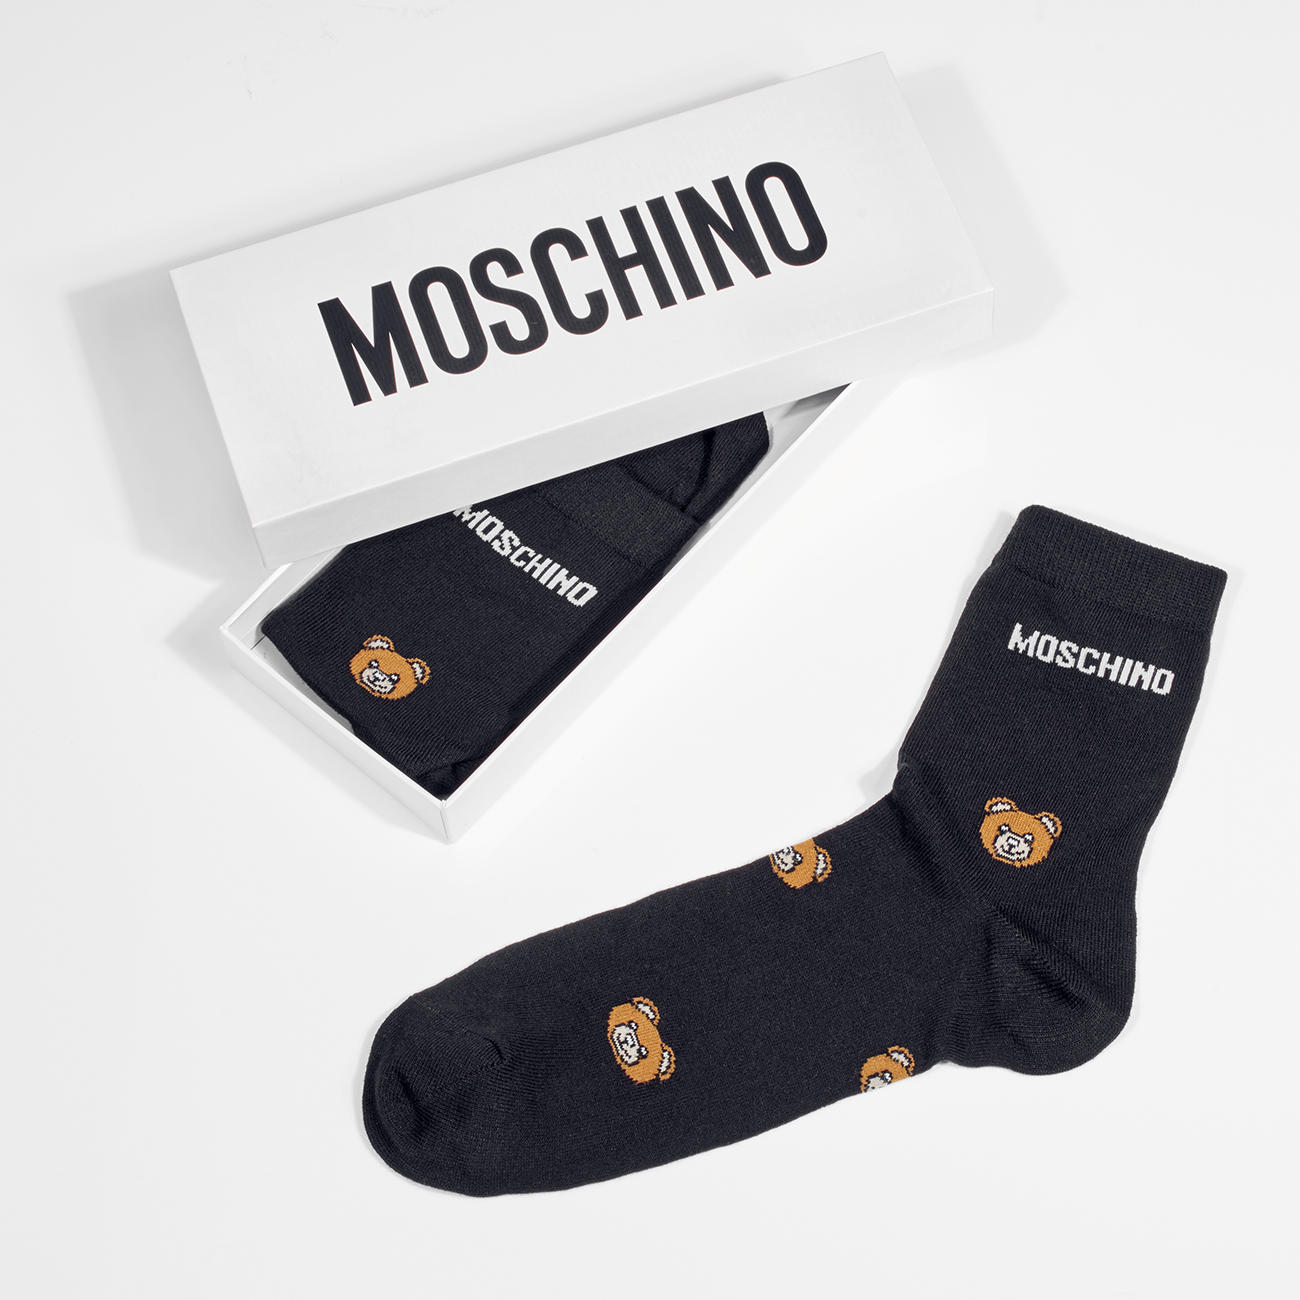 moschino socks off 59% - www.iled-eg.com